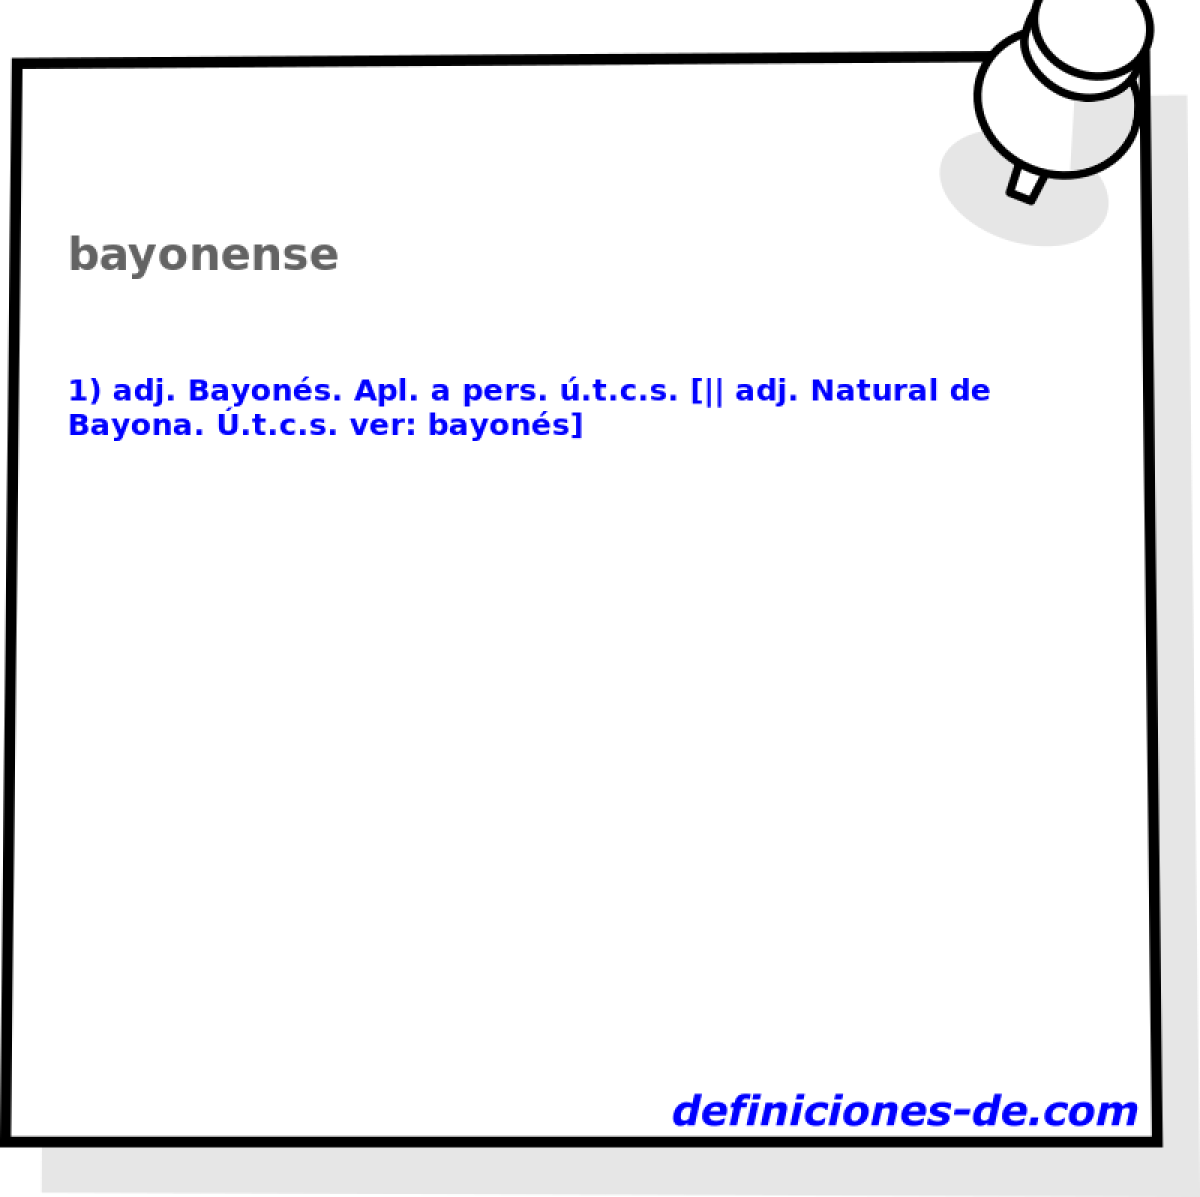 bayonense 